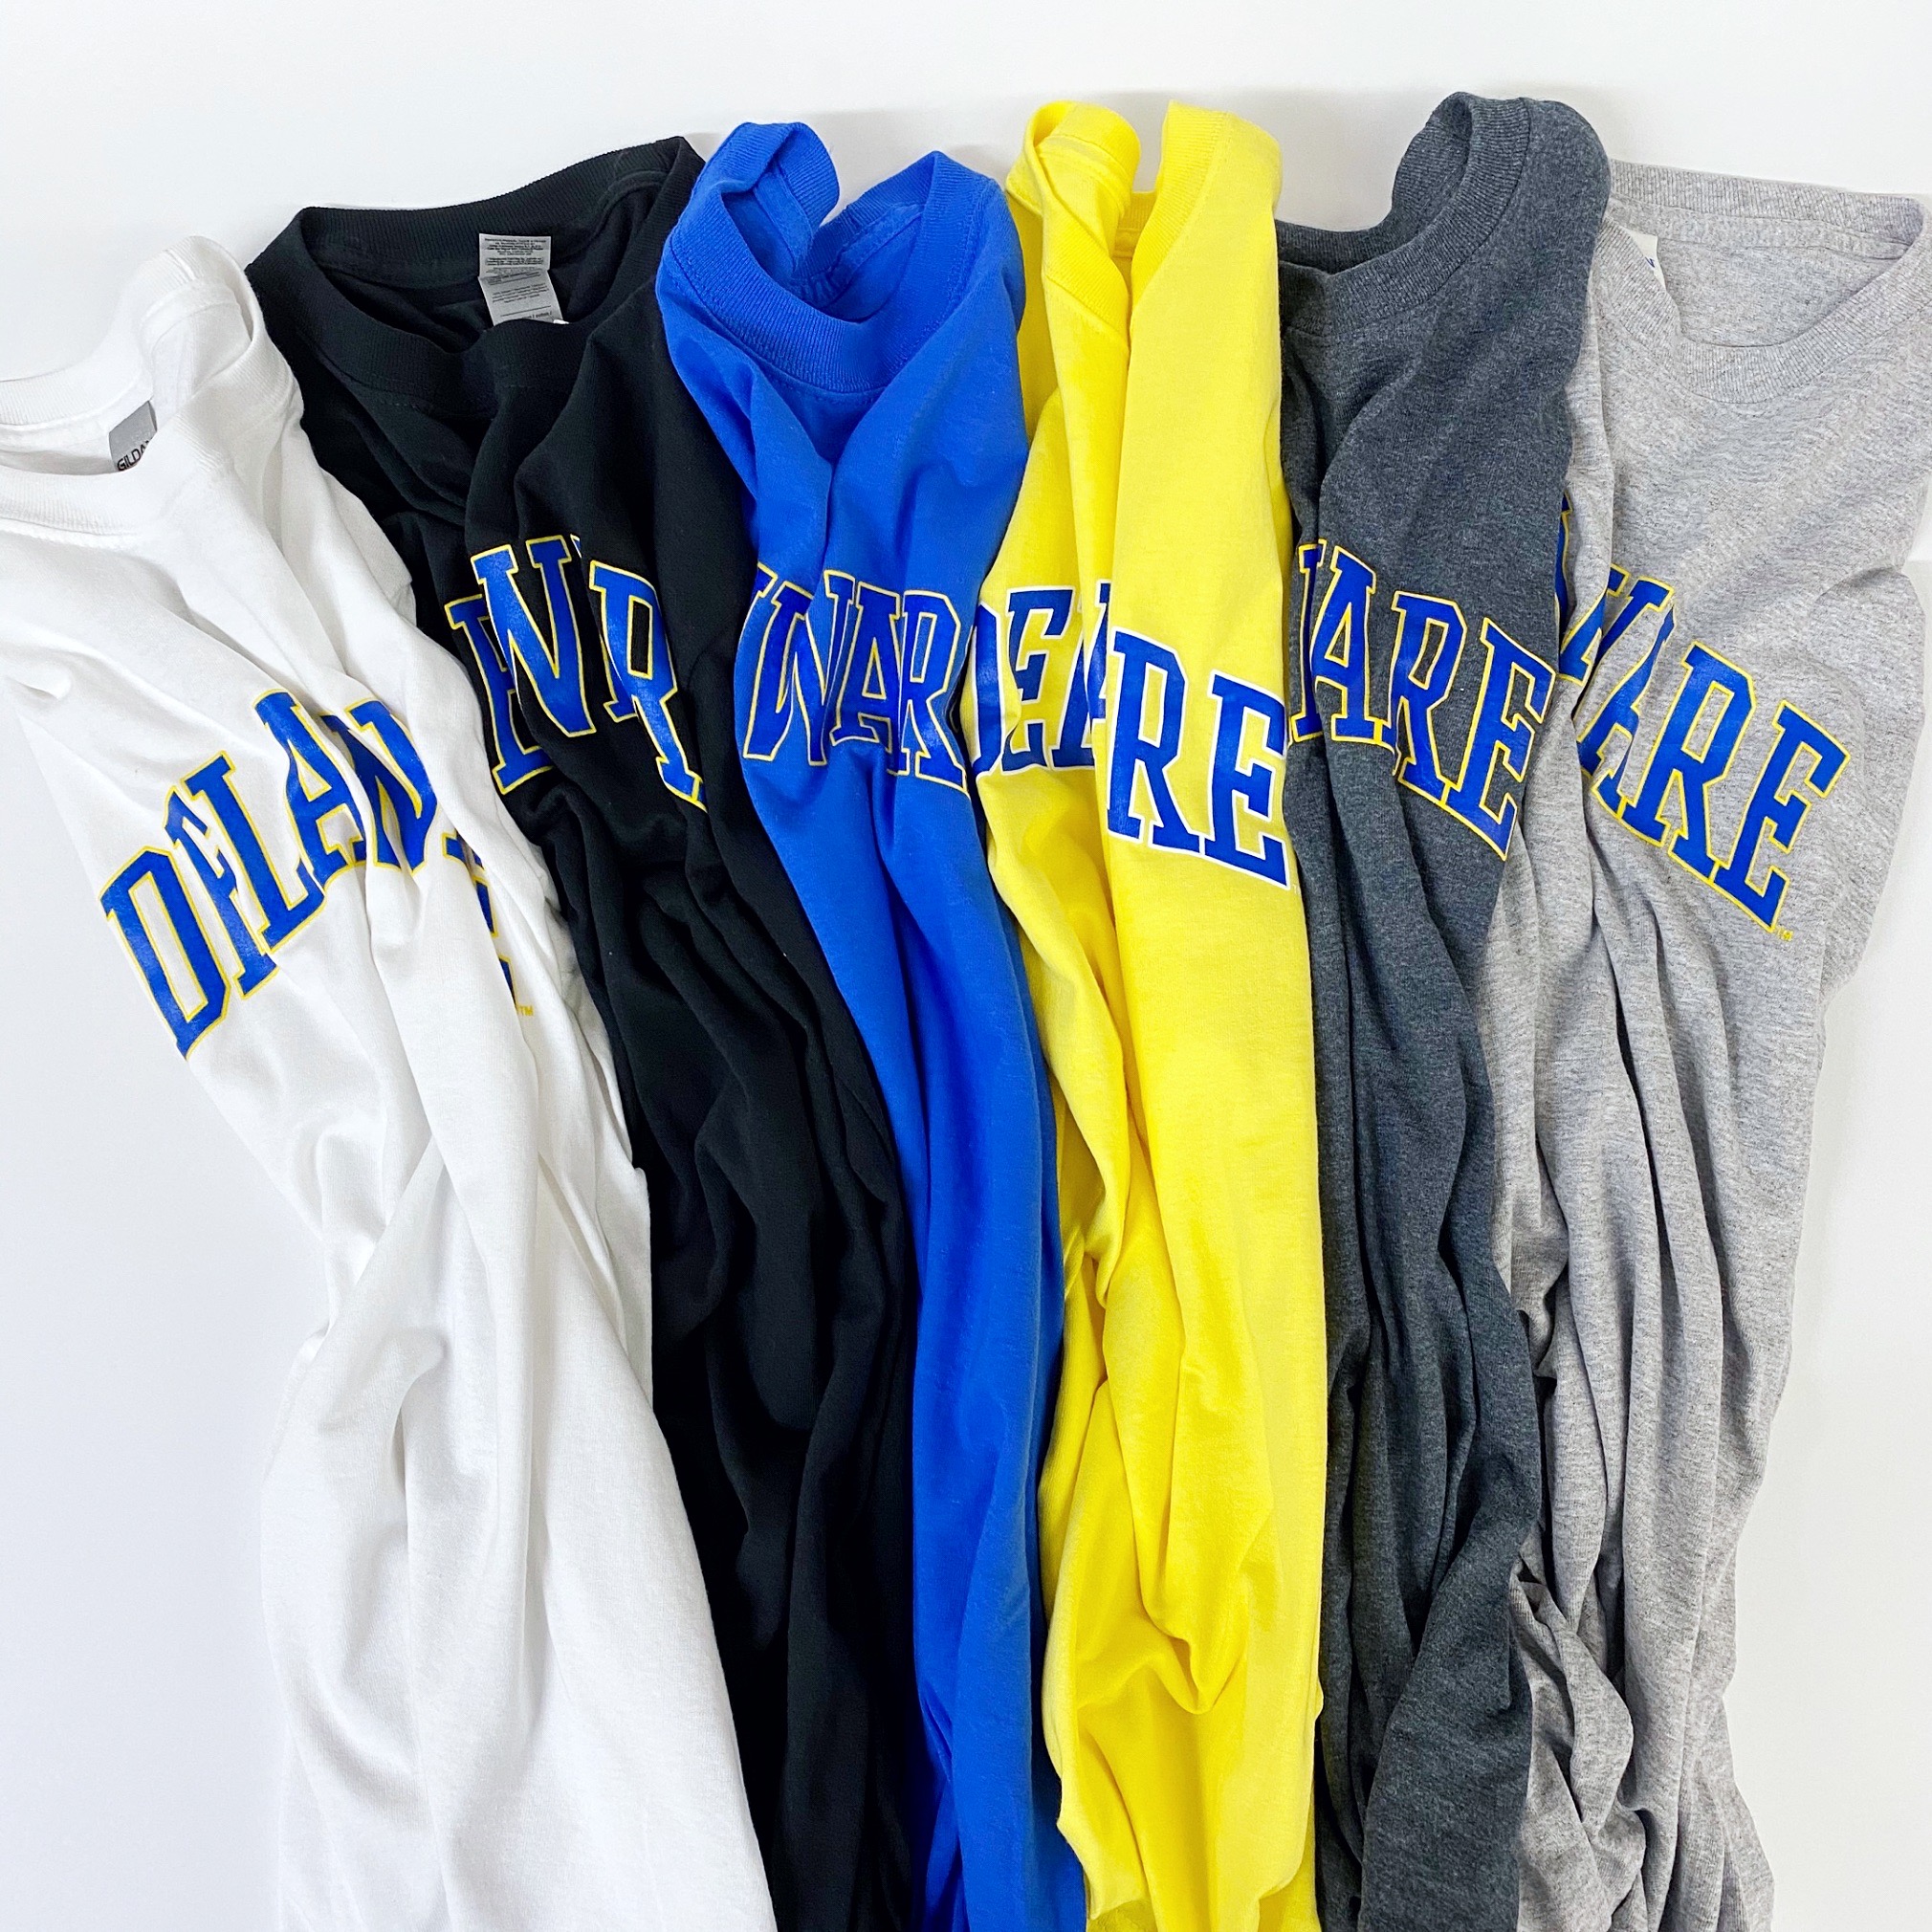 University of Delaware Ice Hockey T-shirt - Oxford